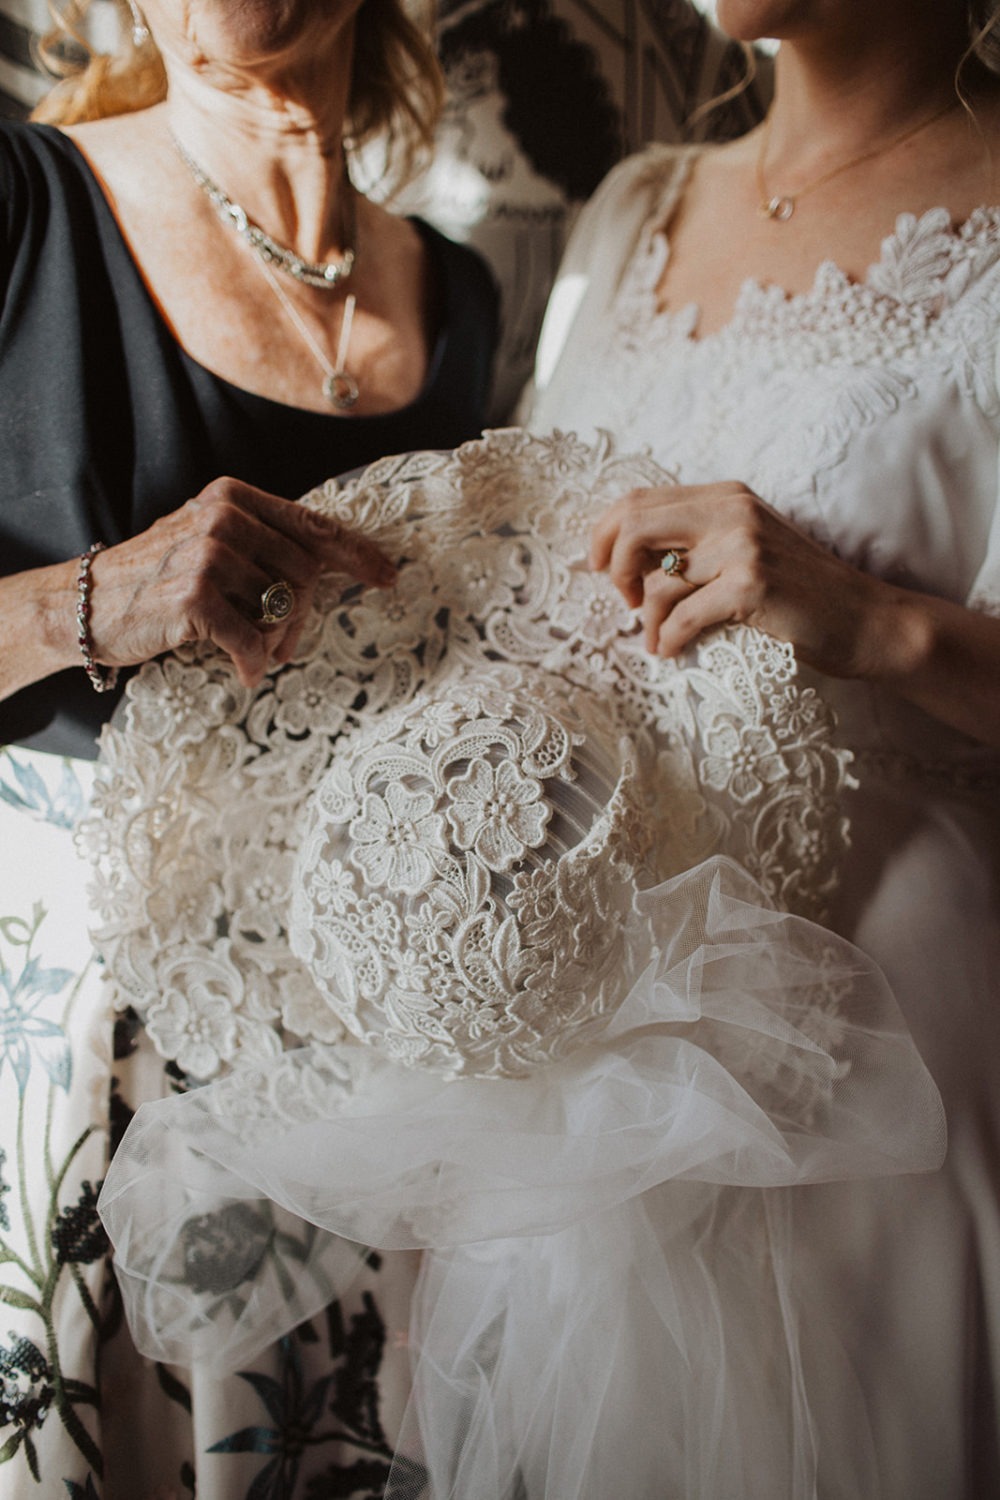 Bride and mom hold wedding veil together